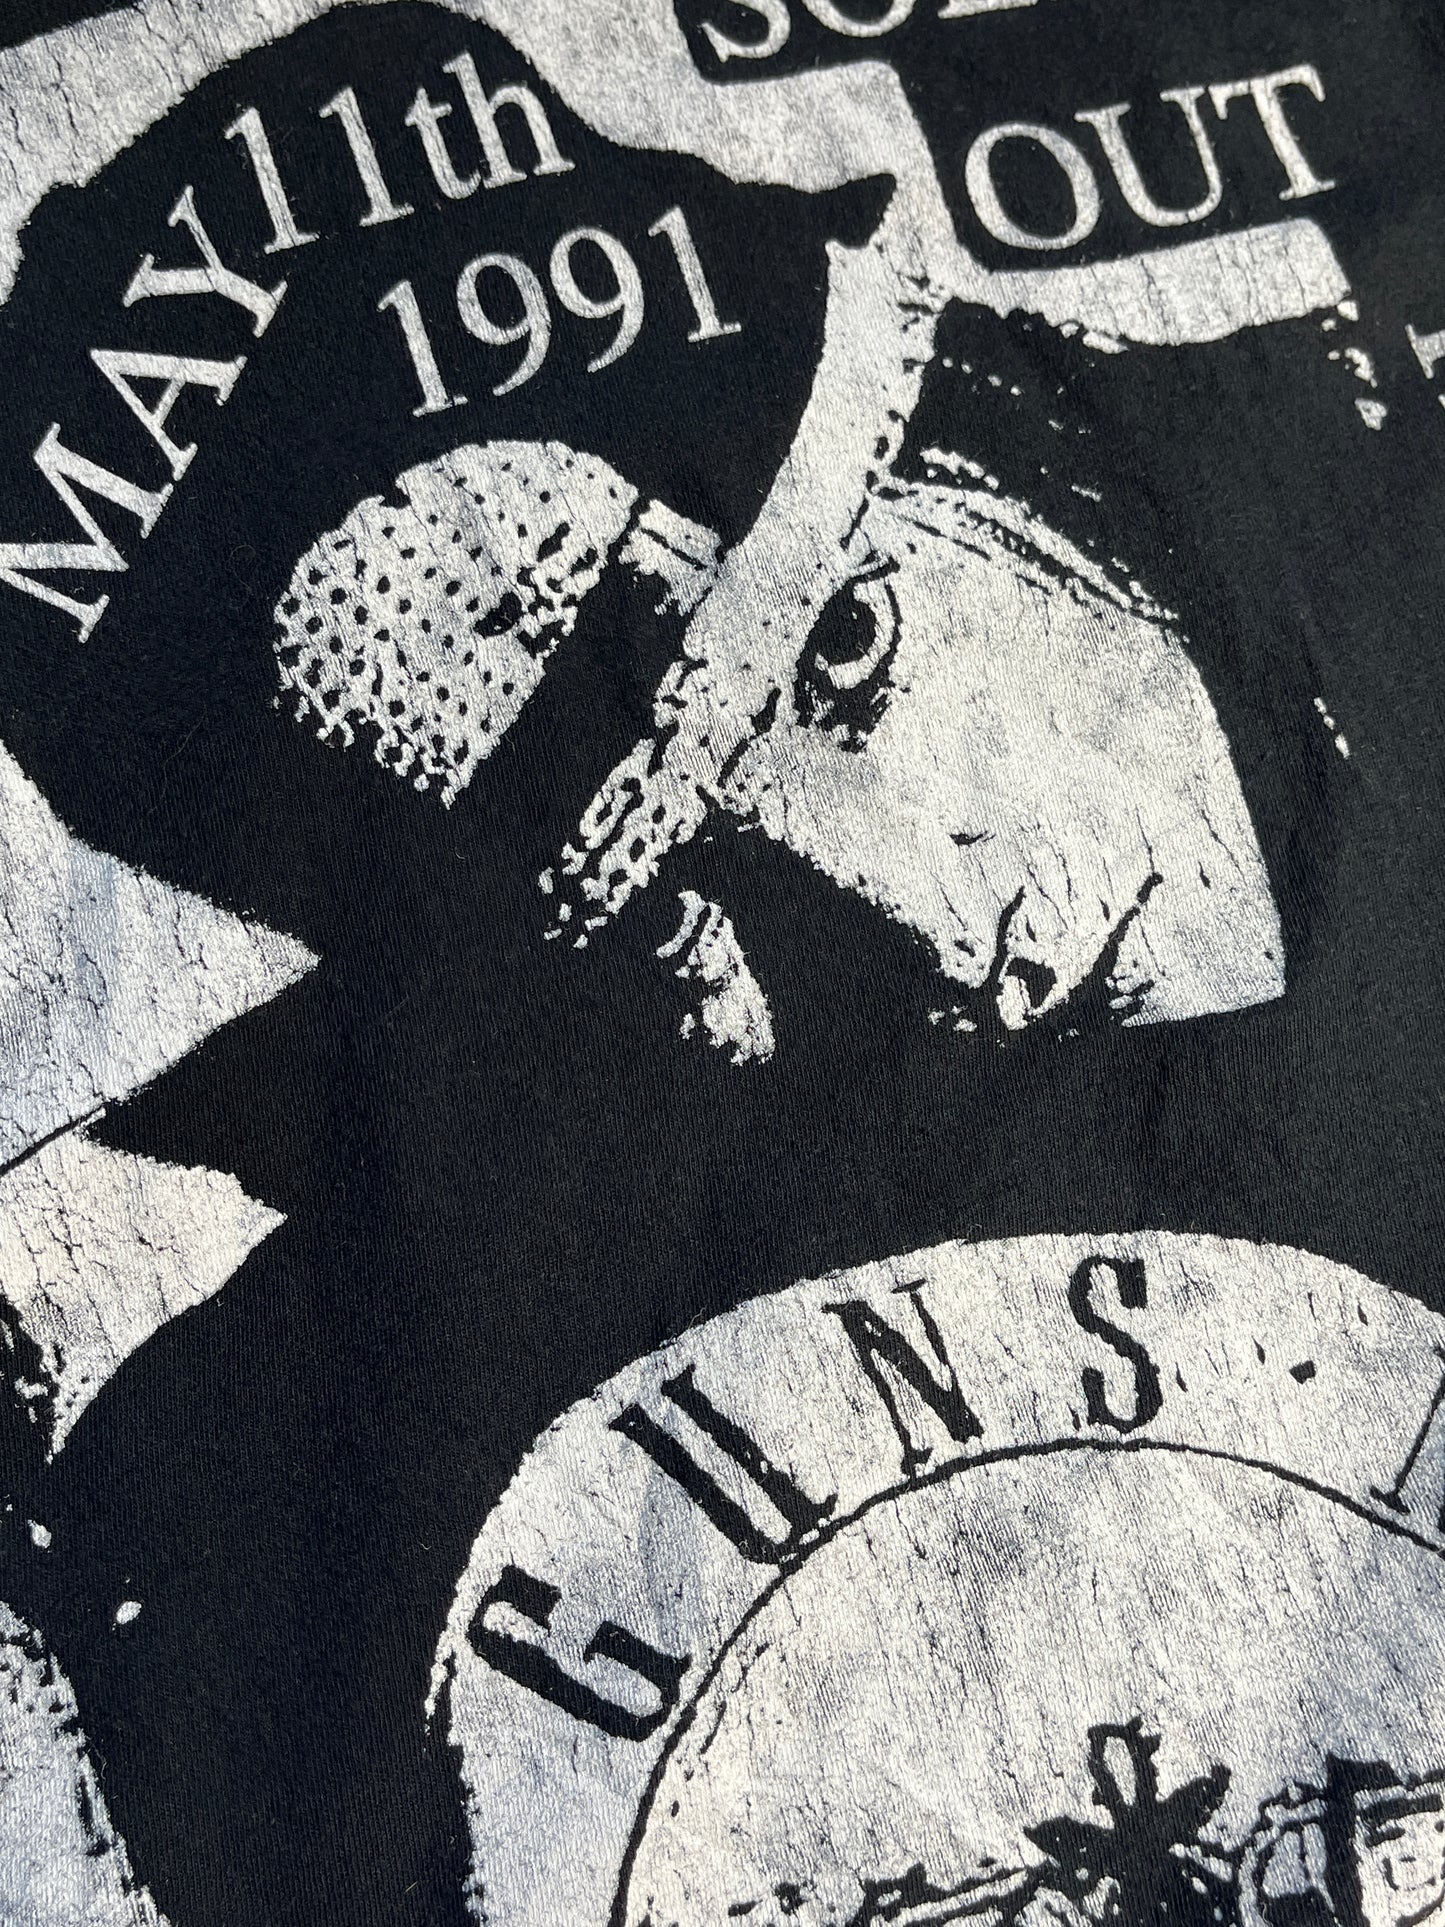 Vintage Guns N Roses T-Shirt Band